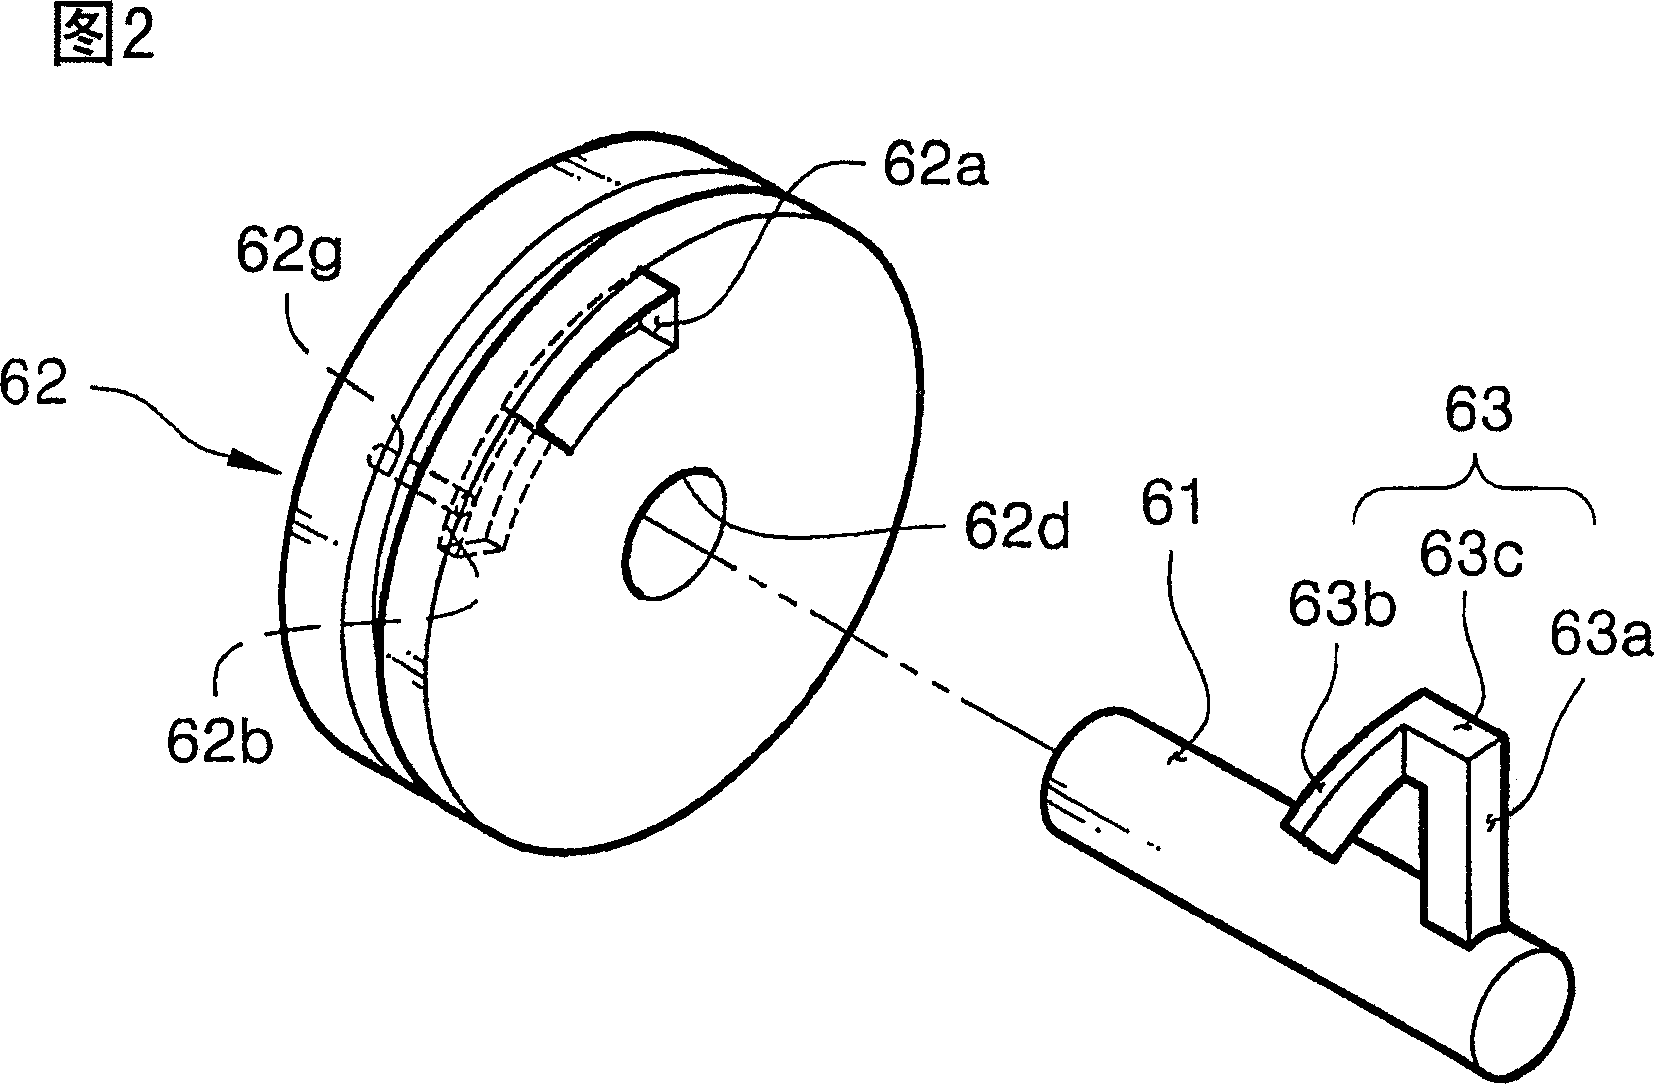 Brake actuating apparatus using an electric motor